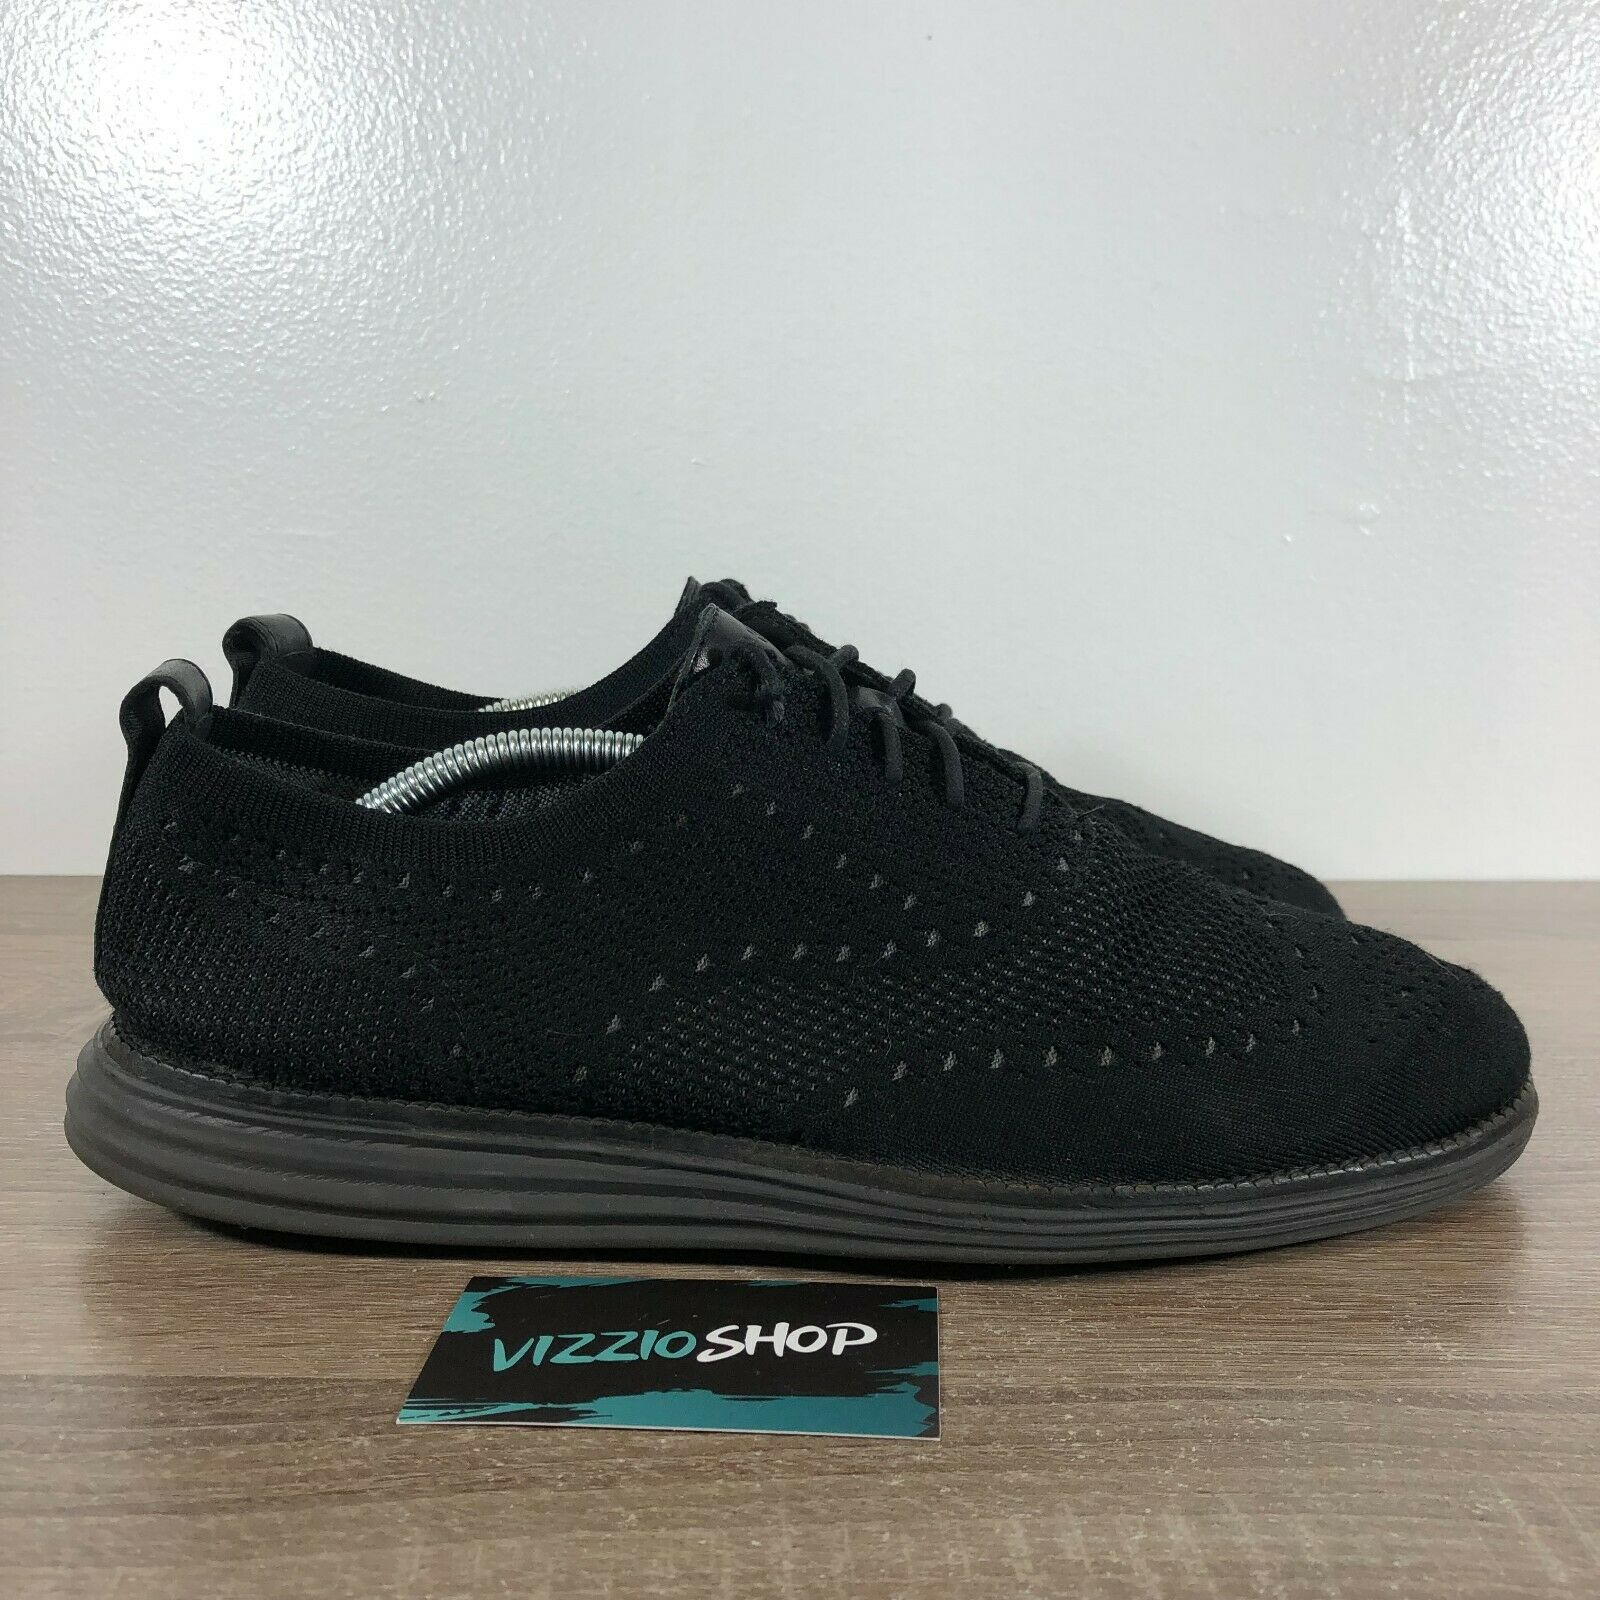 Cole Haan OriginalGrand Wingtip Black Oxford Shoes Men's 10.5 C28443